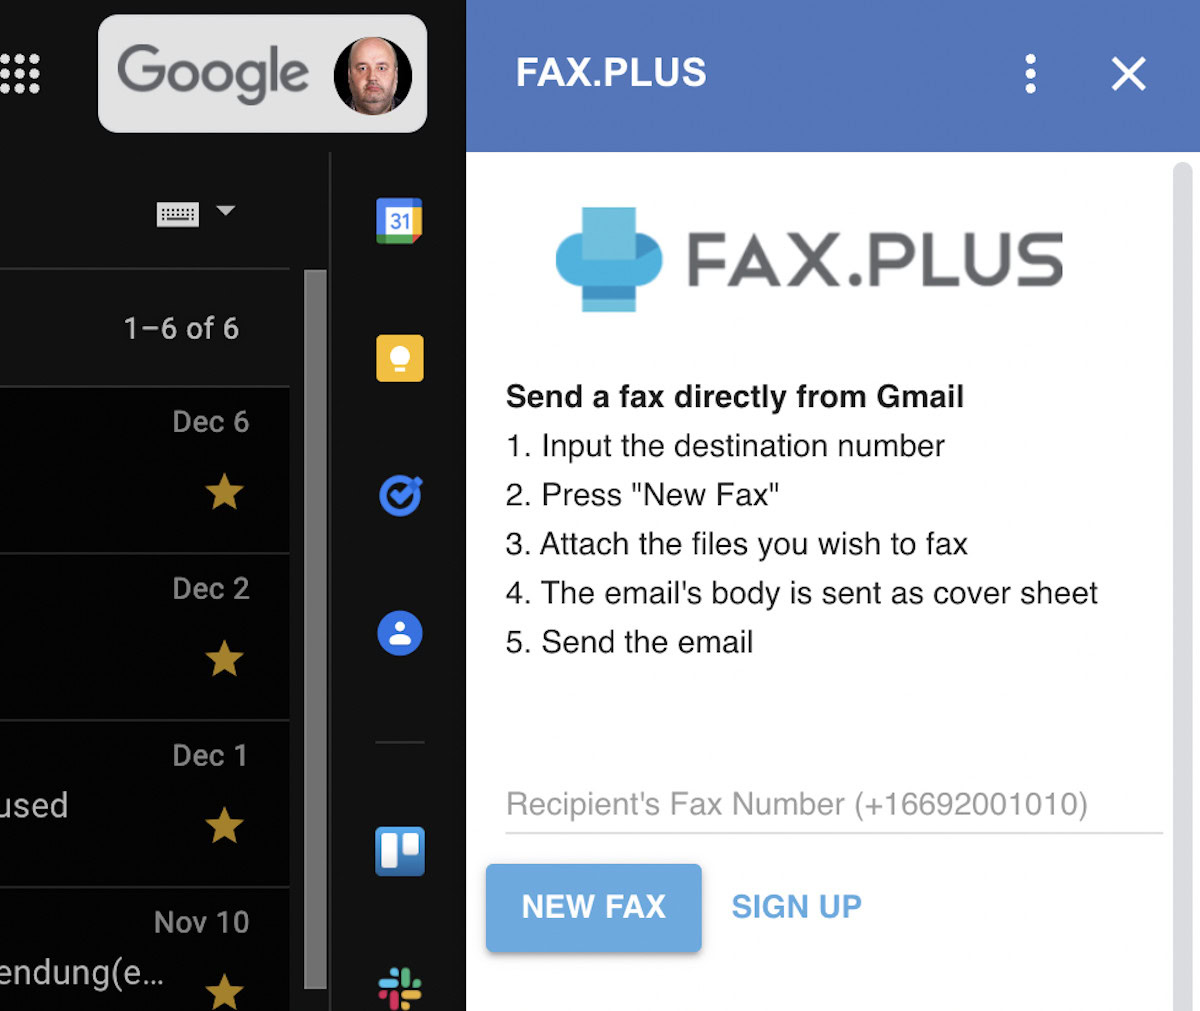 Fax.Plus sidebar in Gmail